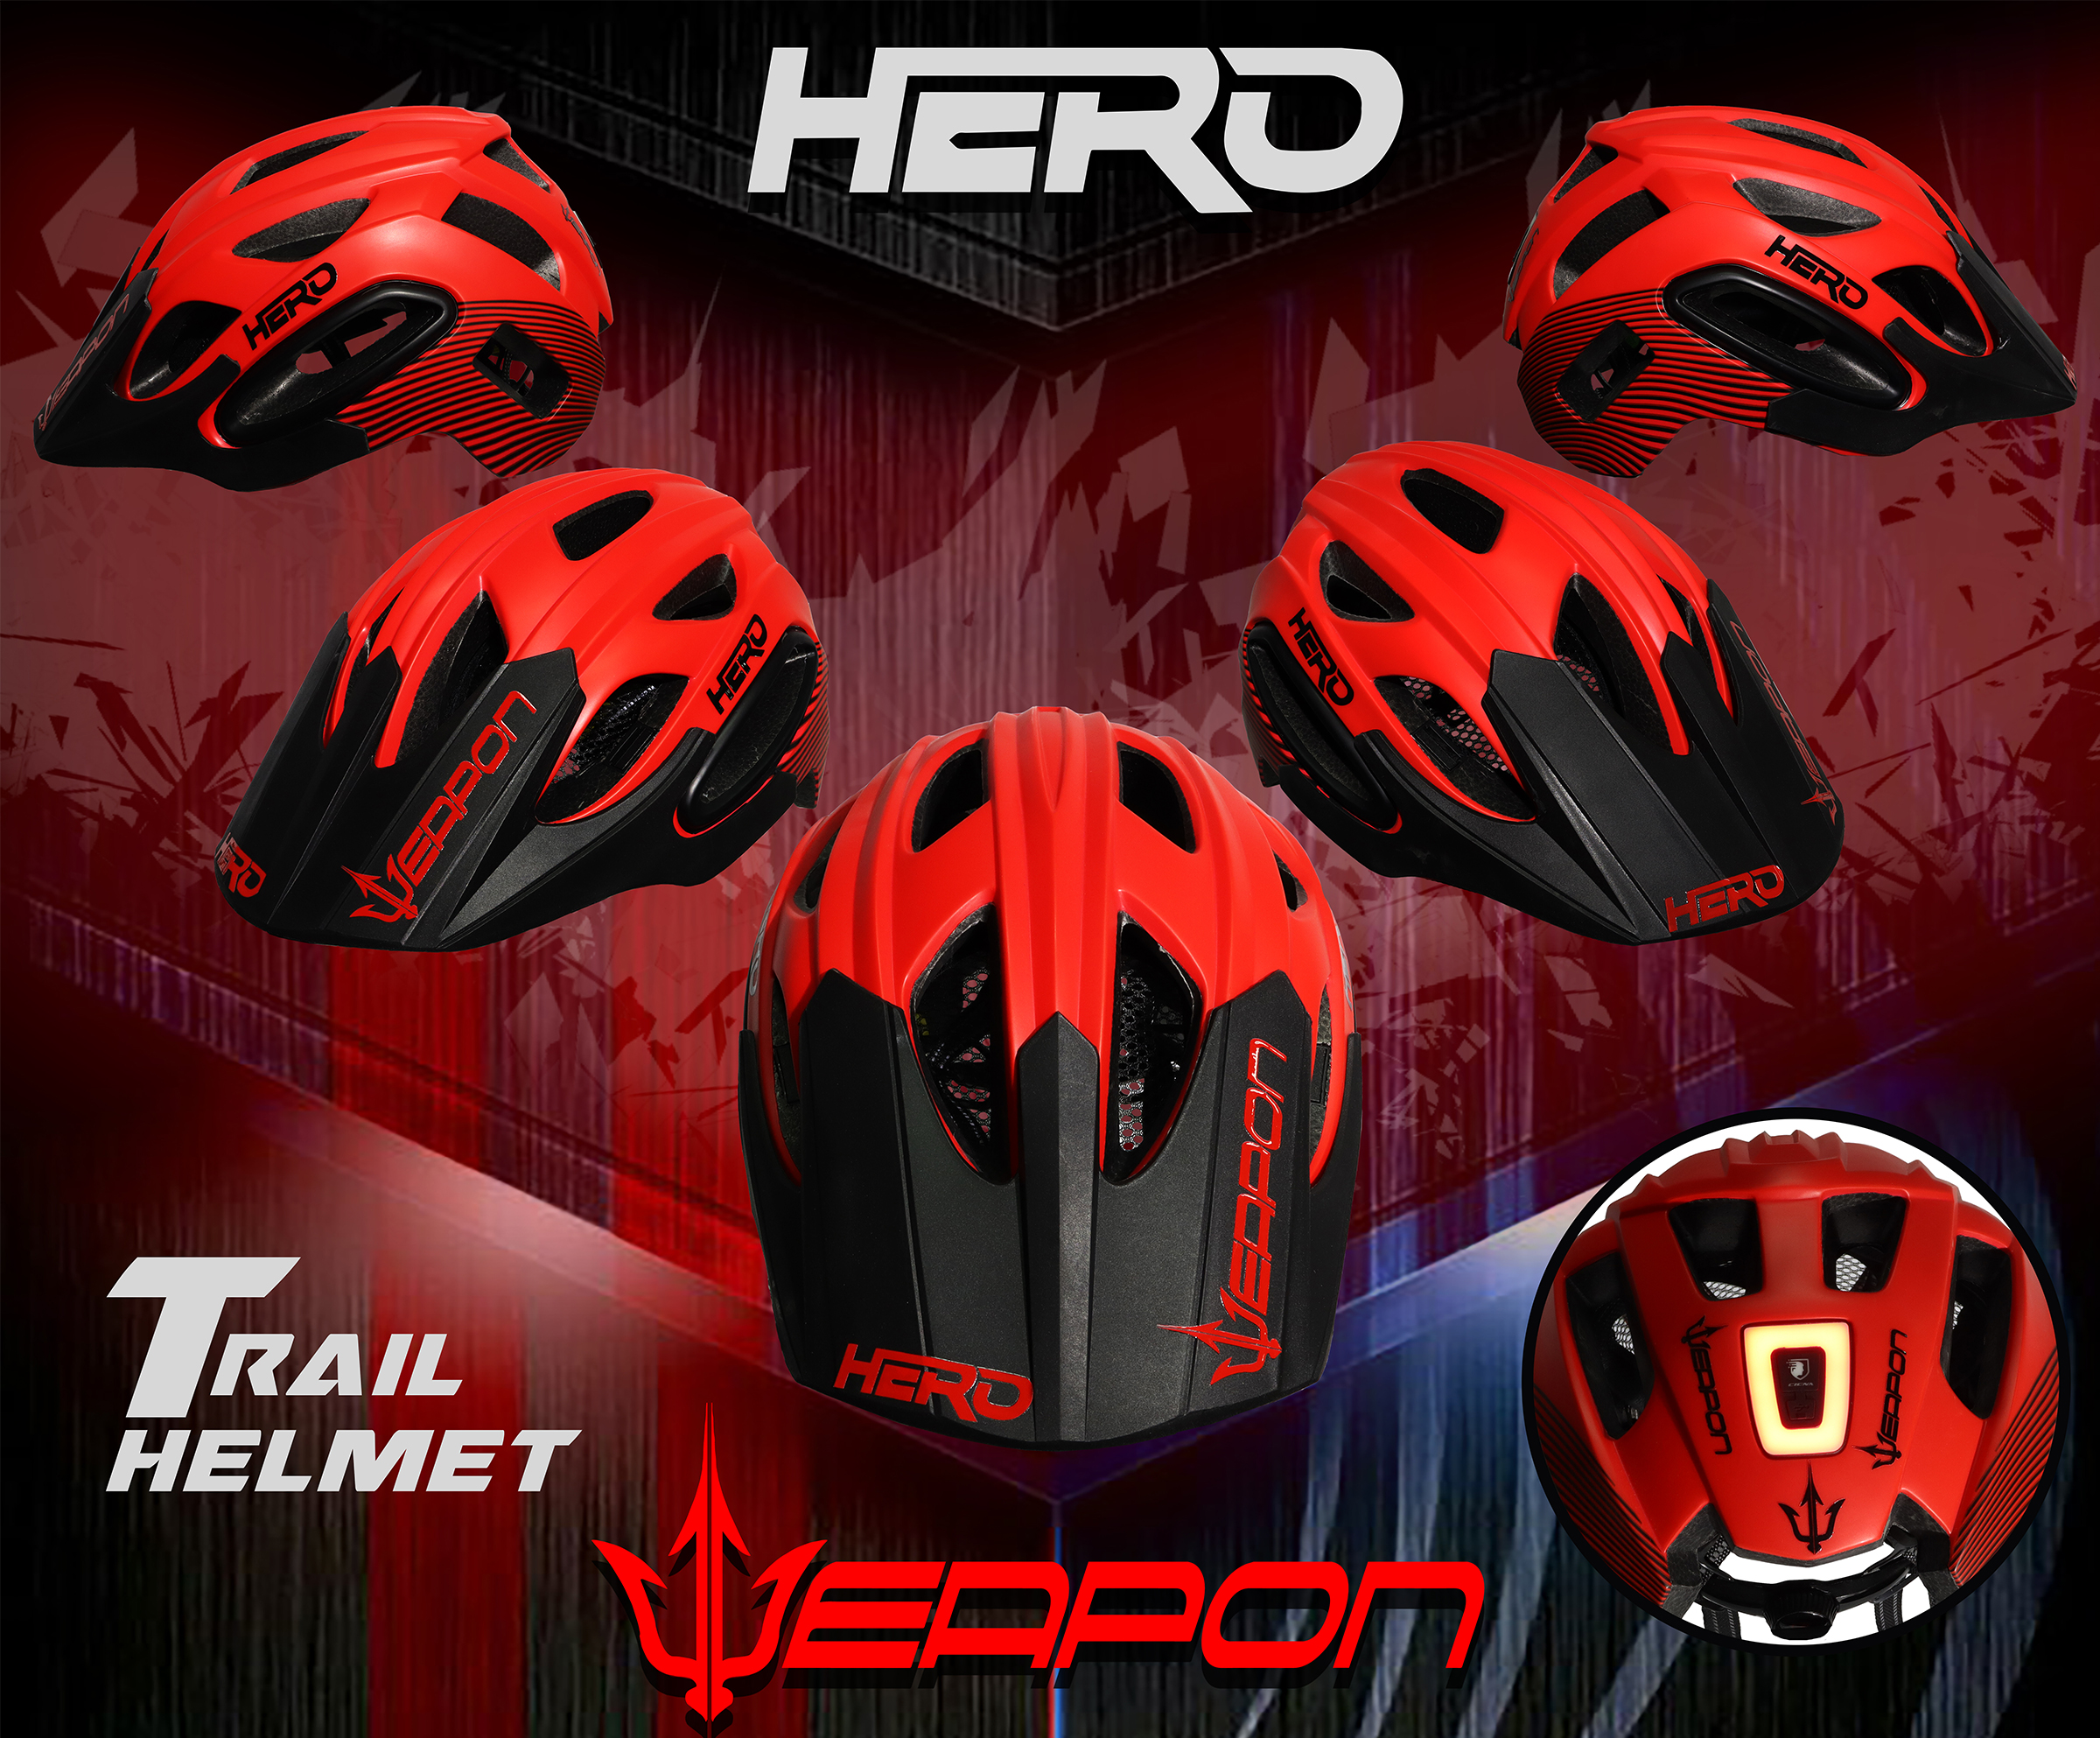 hero-helmet-ads5